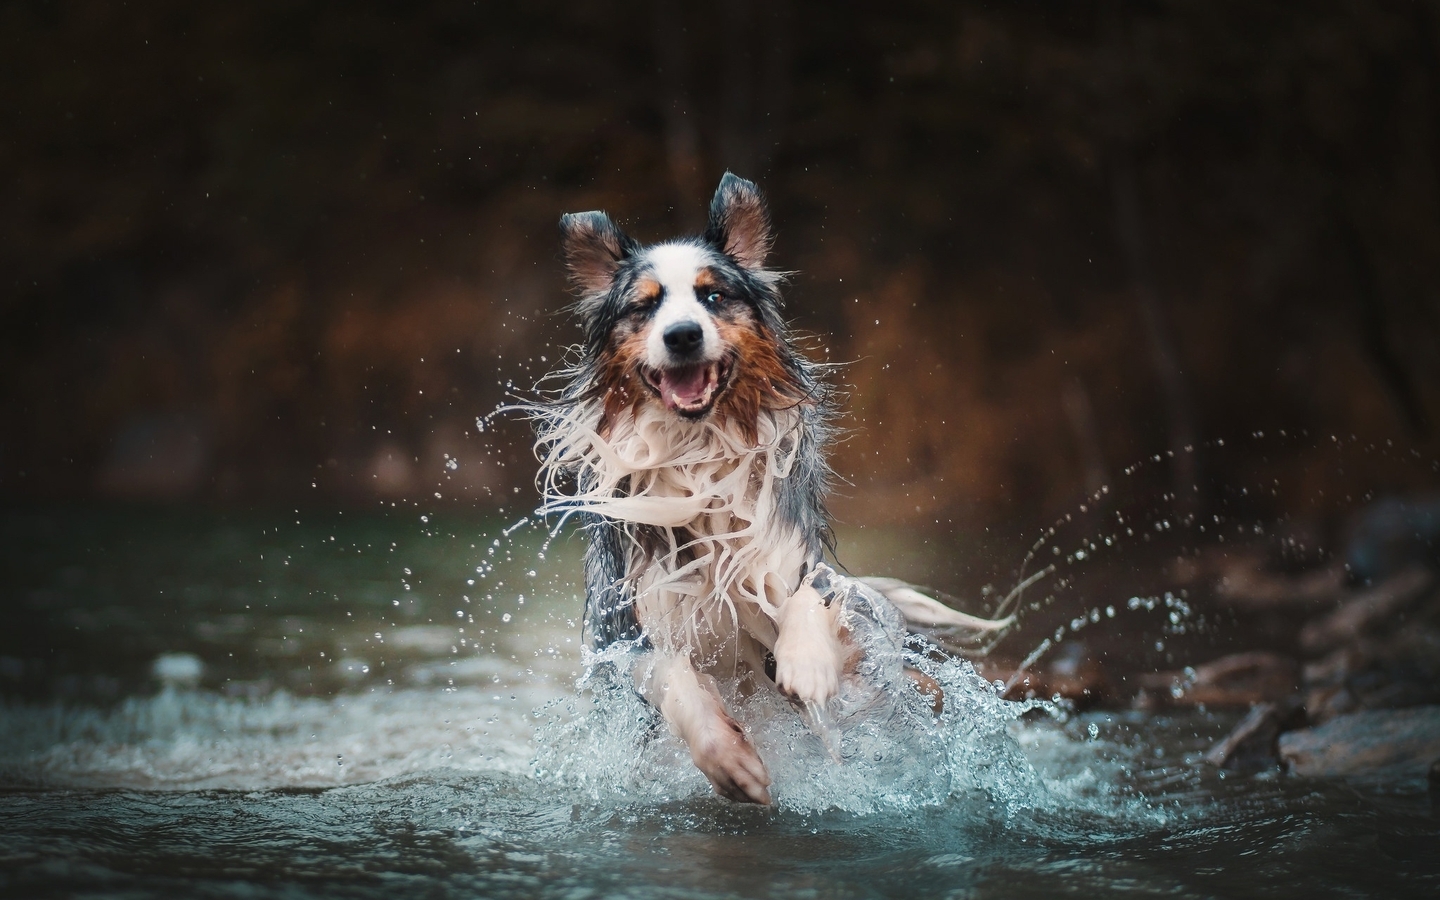 Image: Australian shepherd, Aussie, breed, water, splashing, running, wet, mood